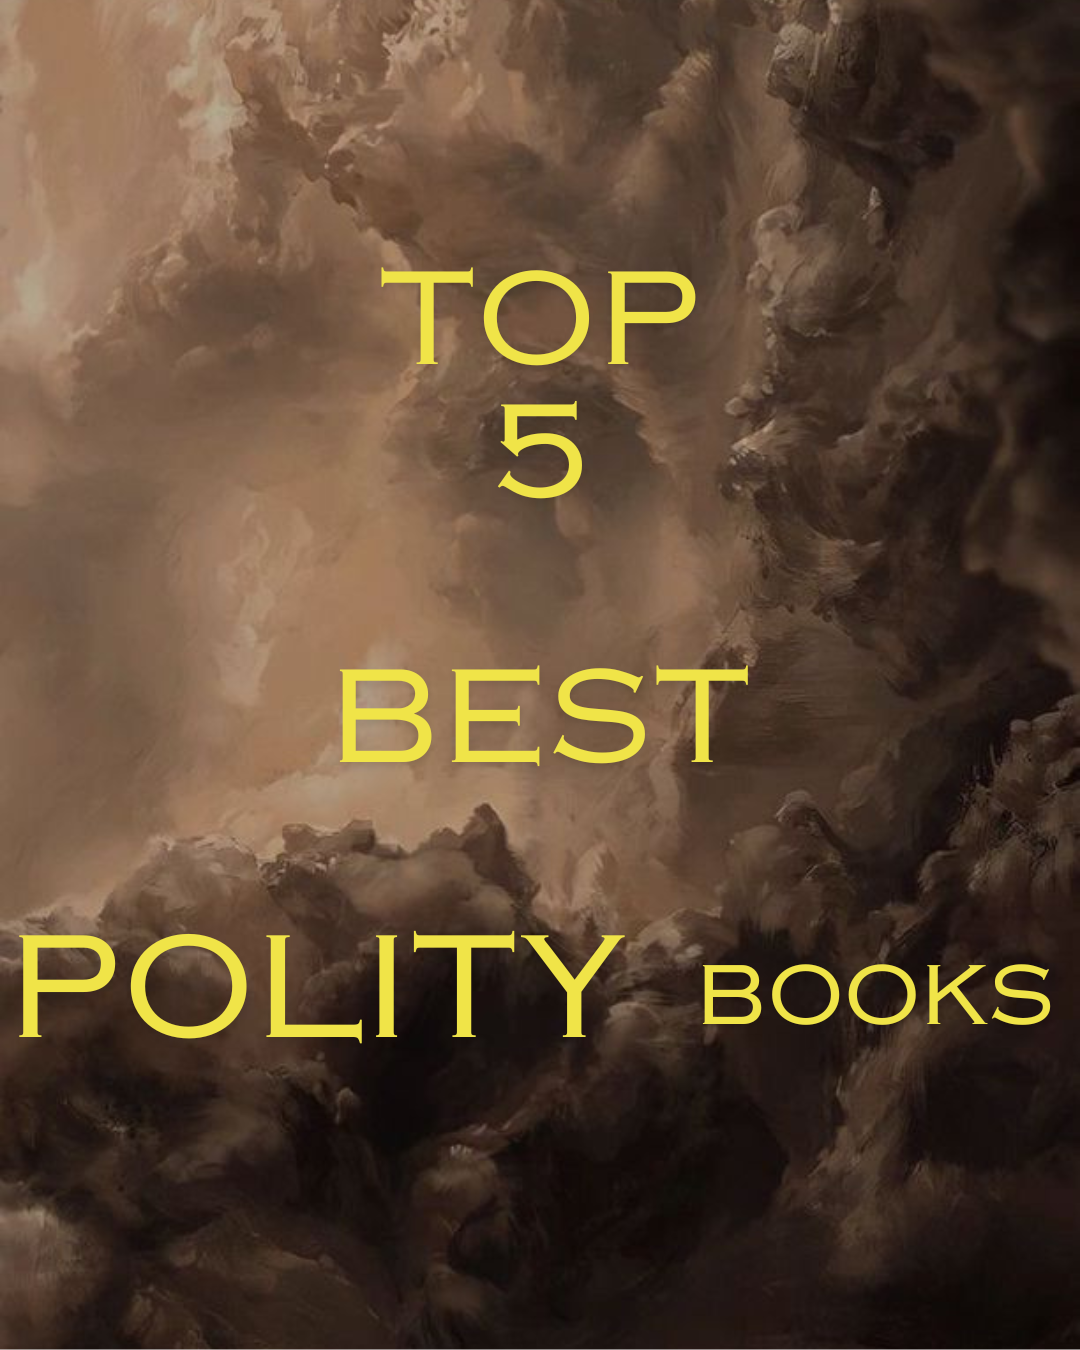 Master UPSC Polity: Top 5 Polity Books